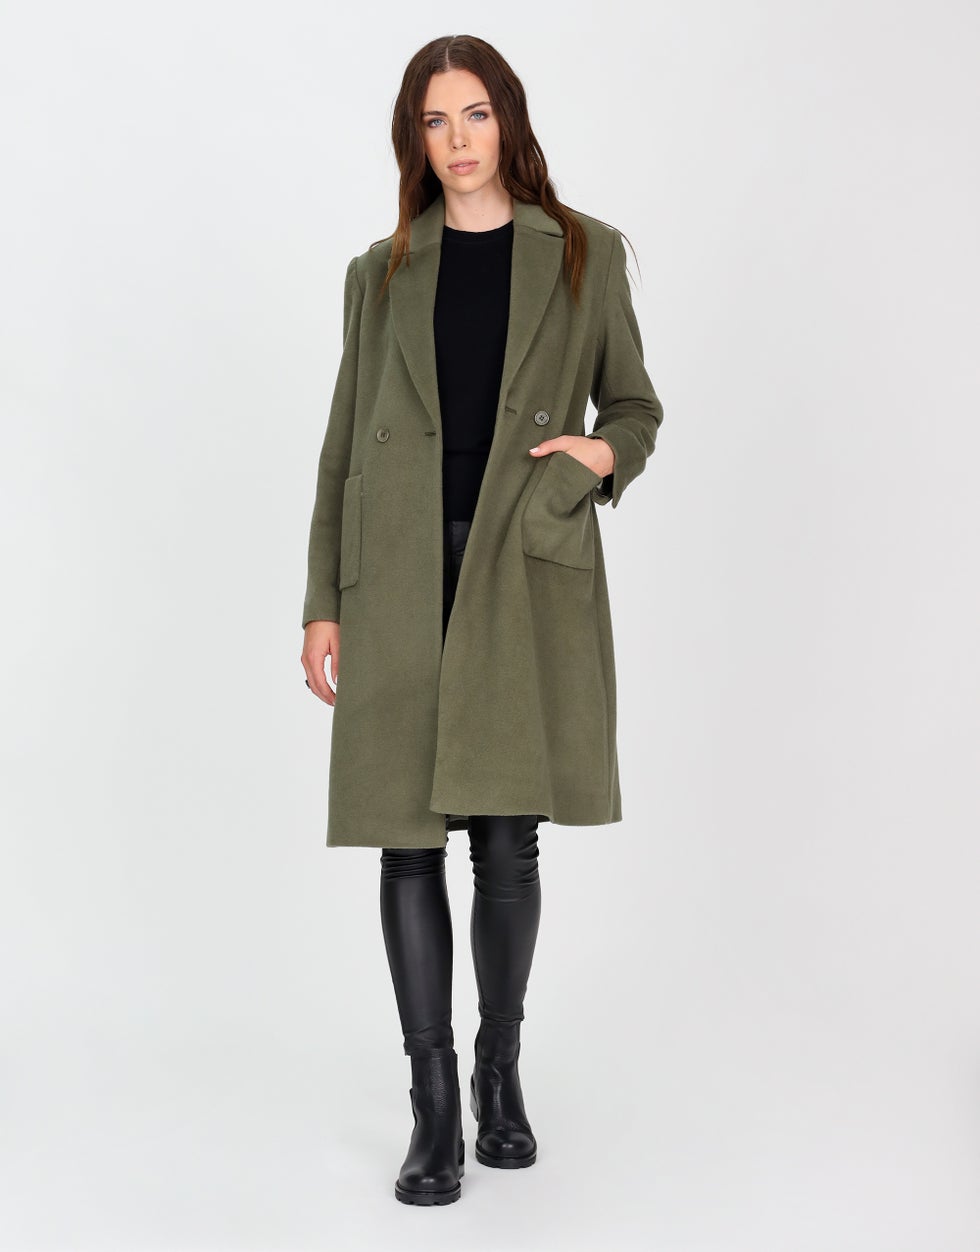 Military Wool Coat - Green - Jackets - Long - Women's Clothing - Storm